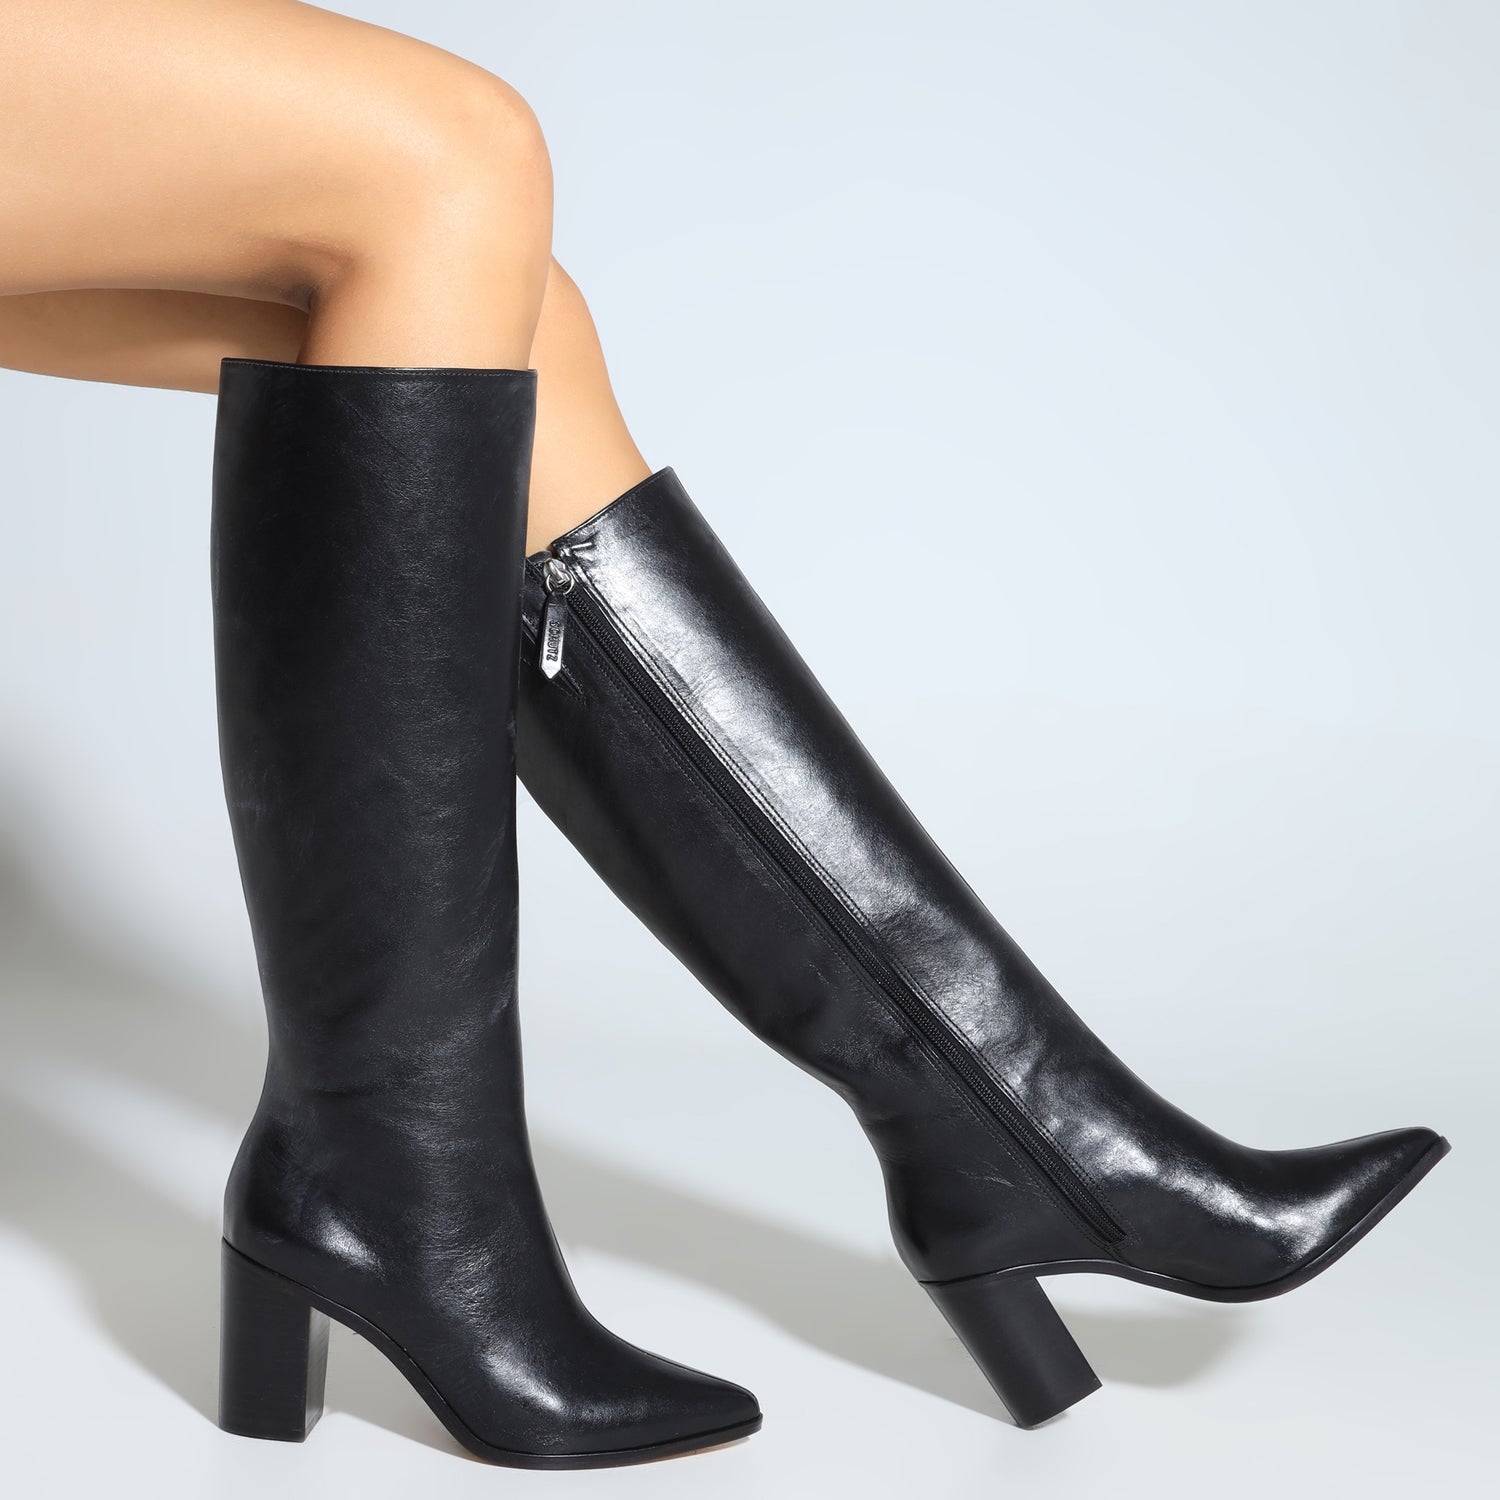 Women's High Heel Boots, High Heel Leather Boots